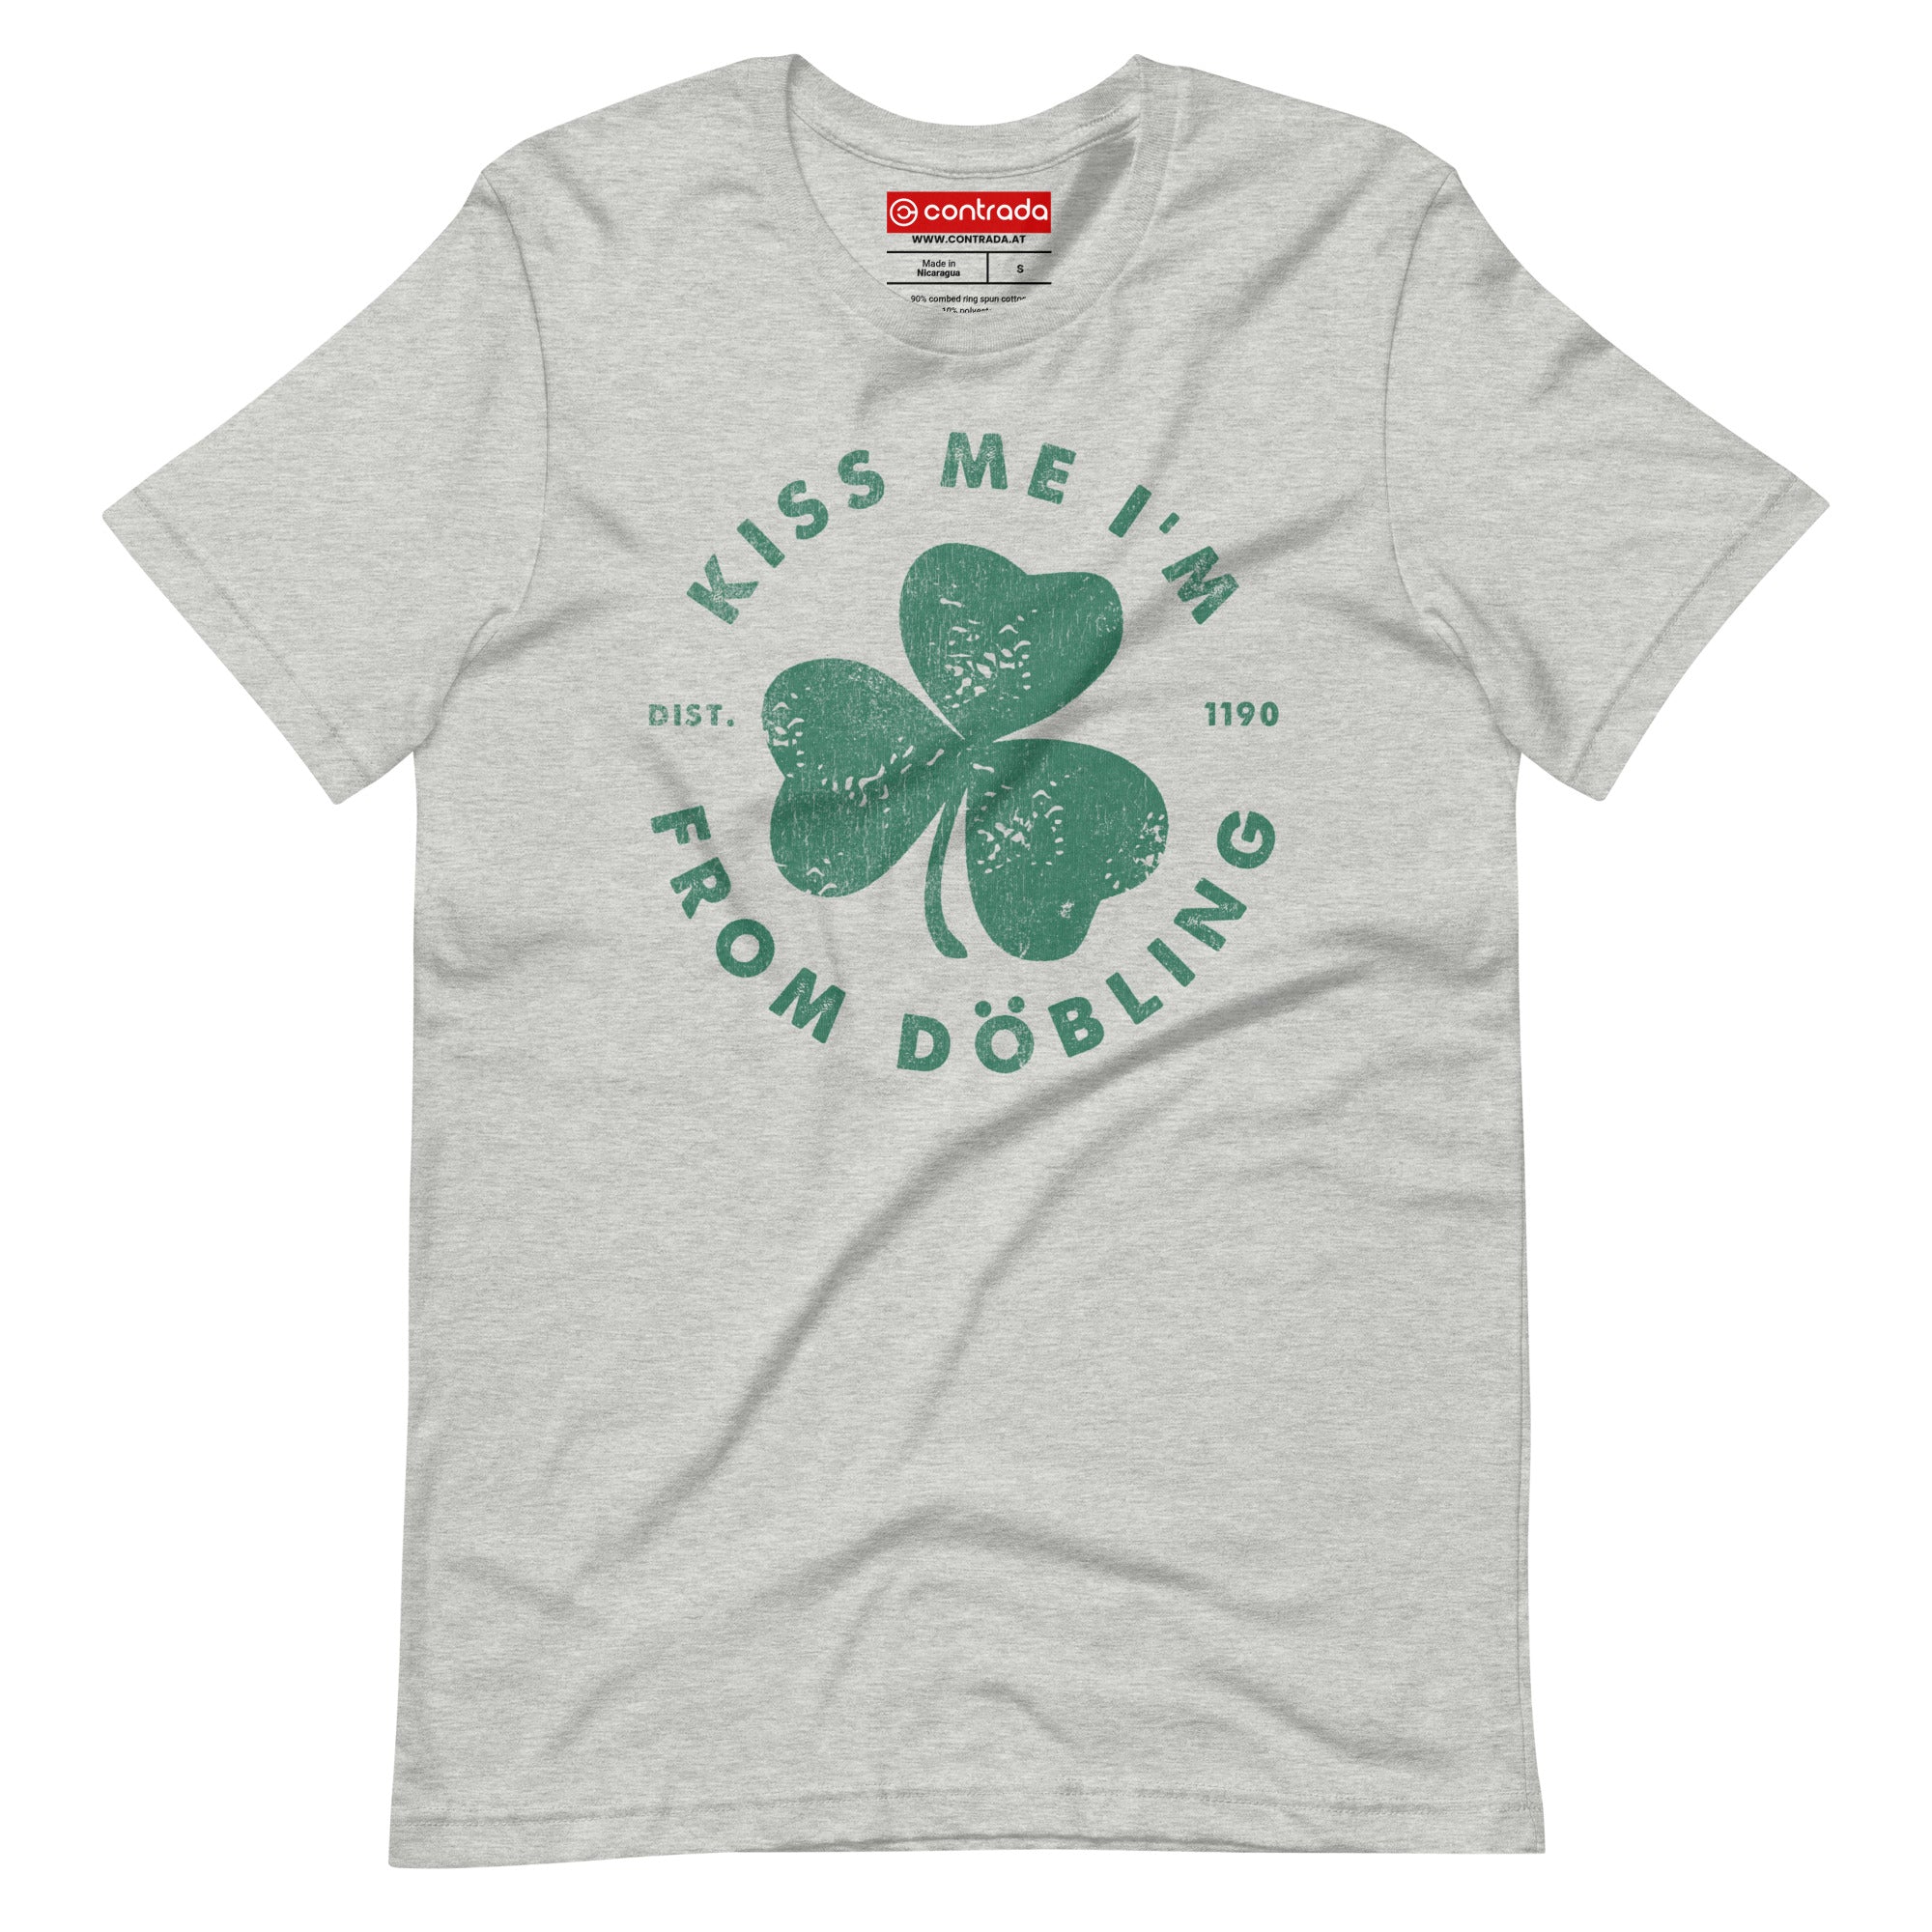 19., Döbling, Wien, „St. Patrick's Day“, Modern Basic T-Shirt